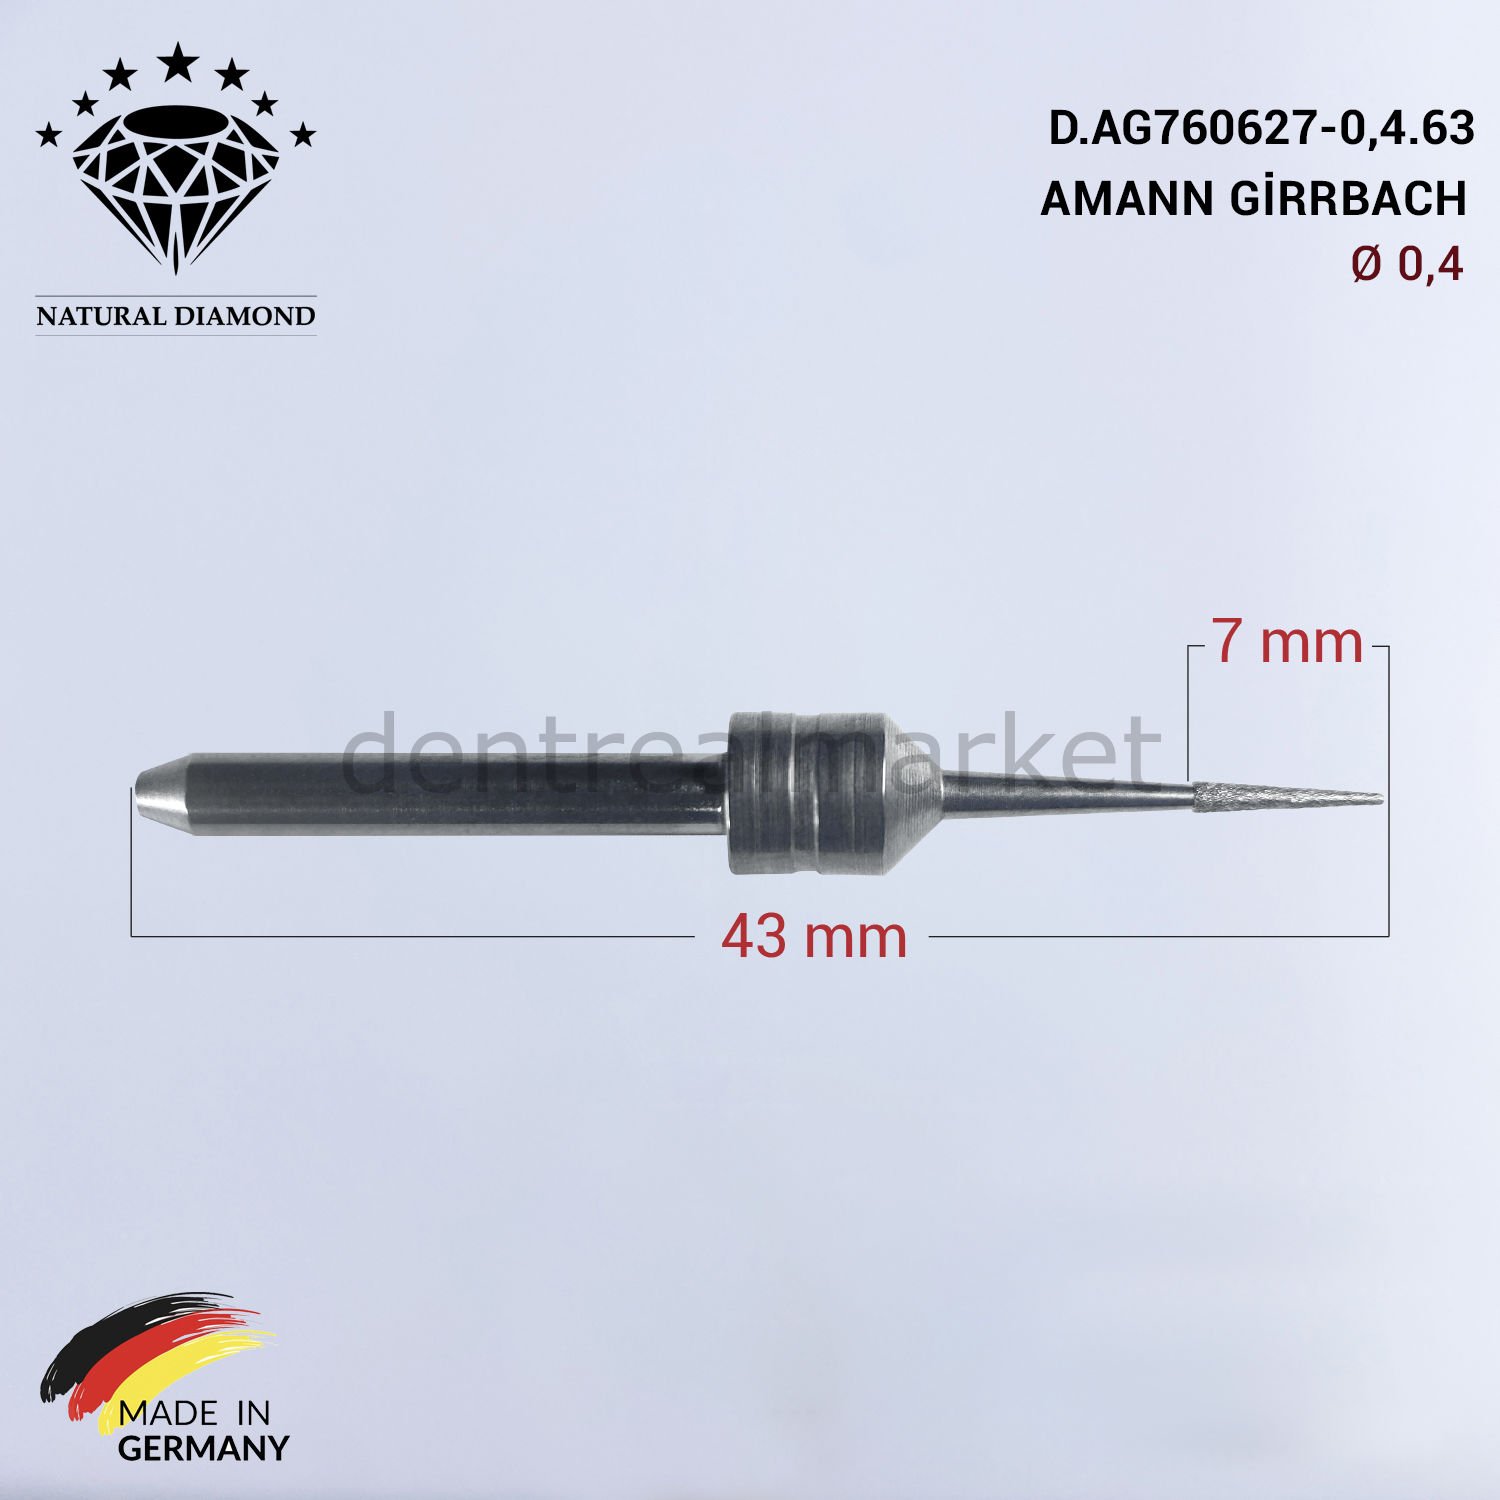 Amann Girrbach Elmas Cad Cam Drill 0,4 mm